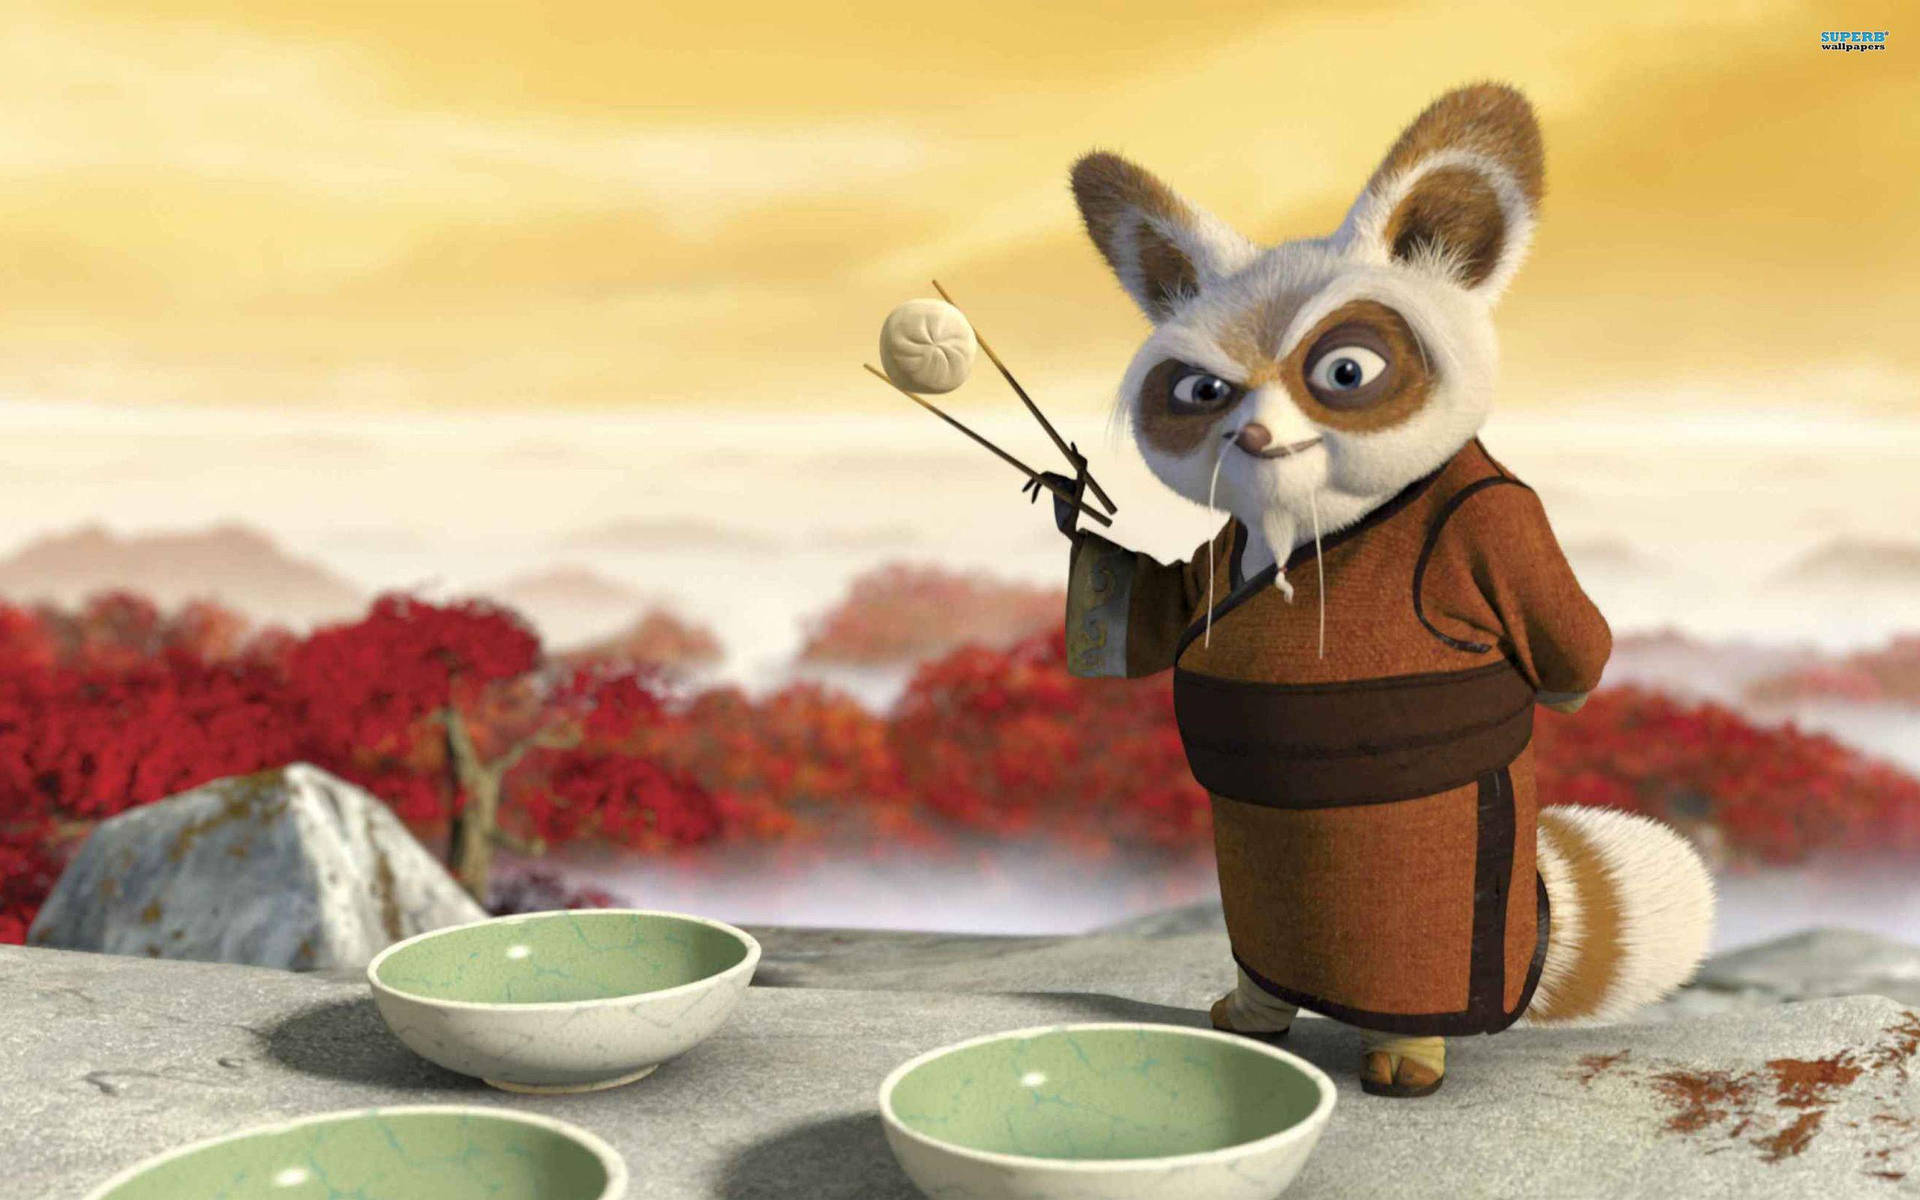 Master Shifu Demonstrating Incredible Agility With Chopsticks In Kung Fu Panda.